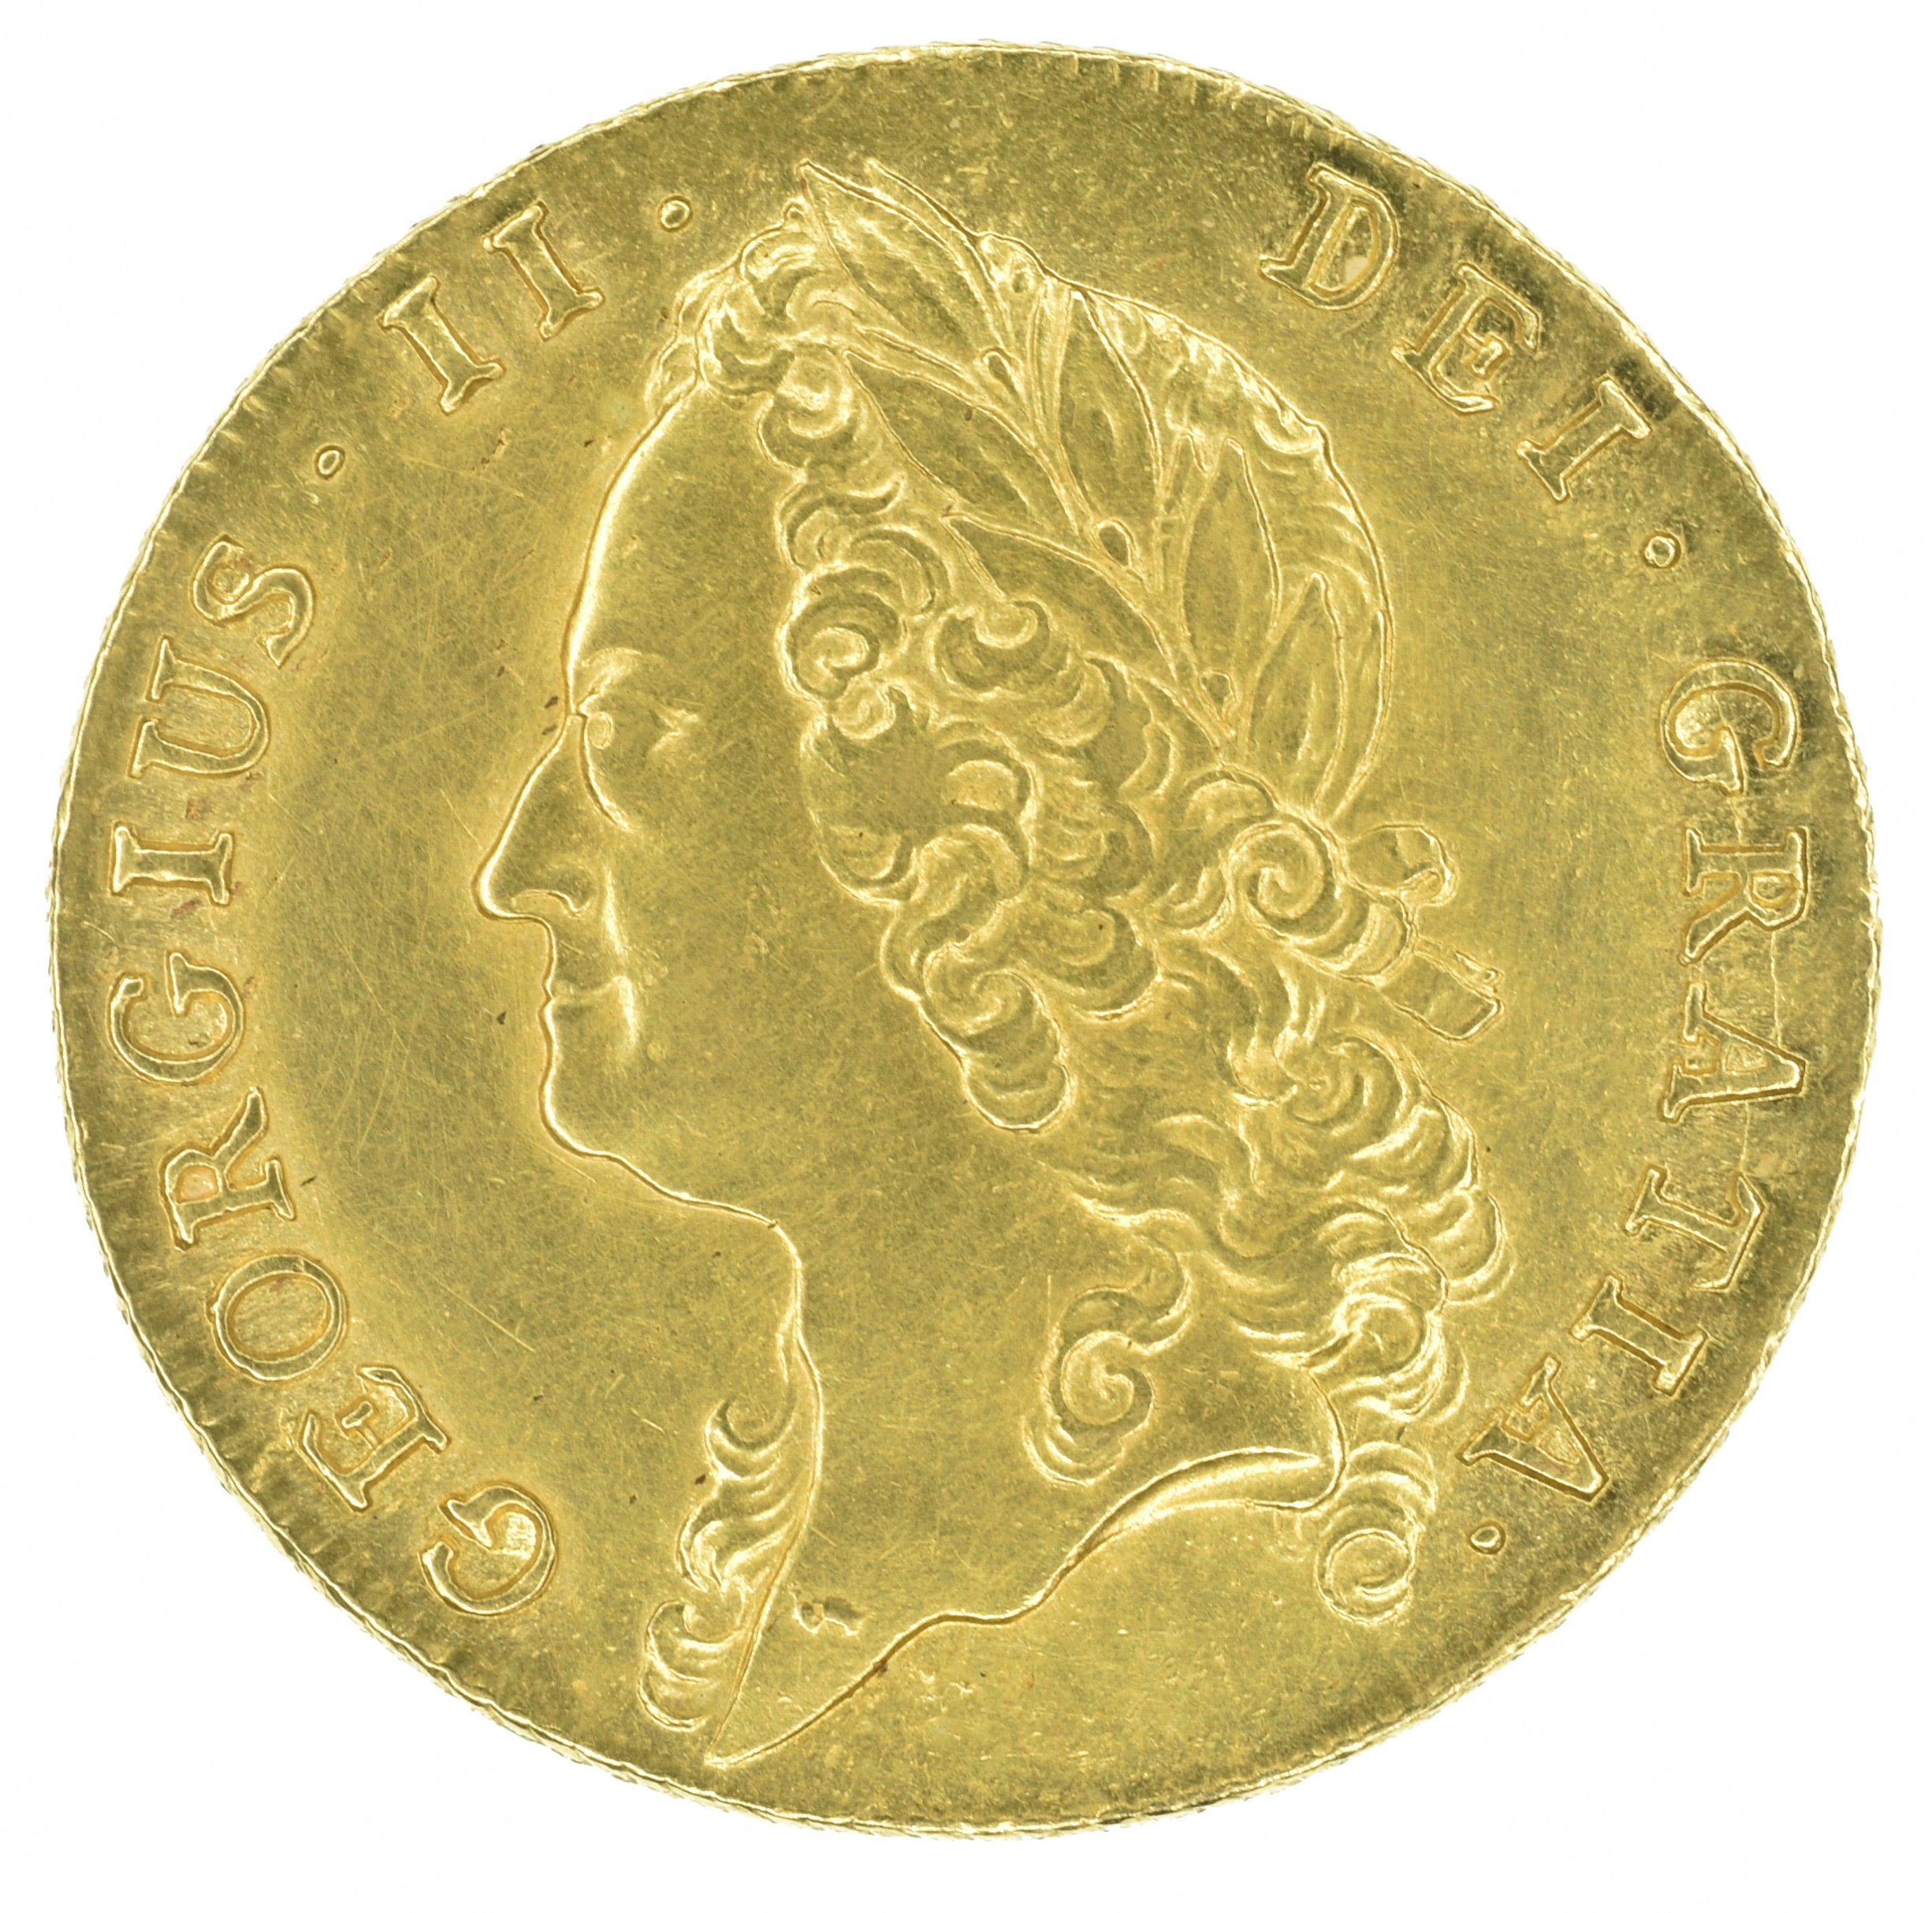 Coins & Banknotes - Live Online